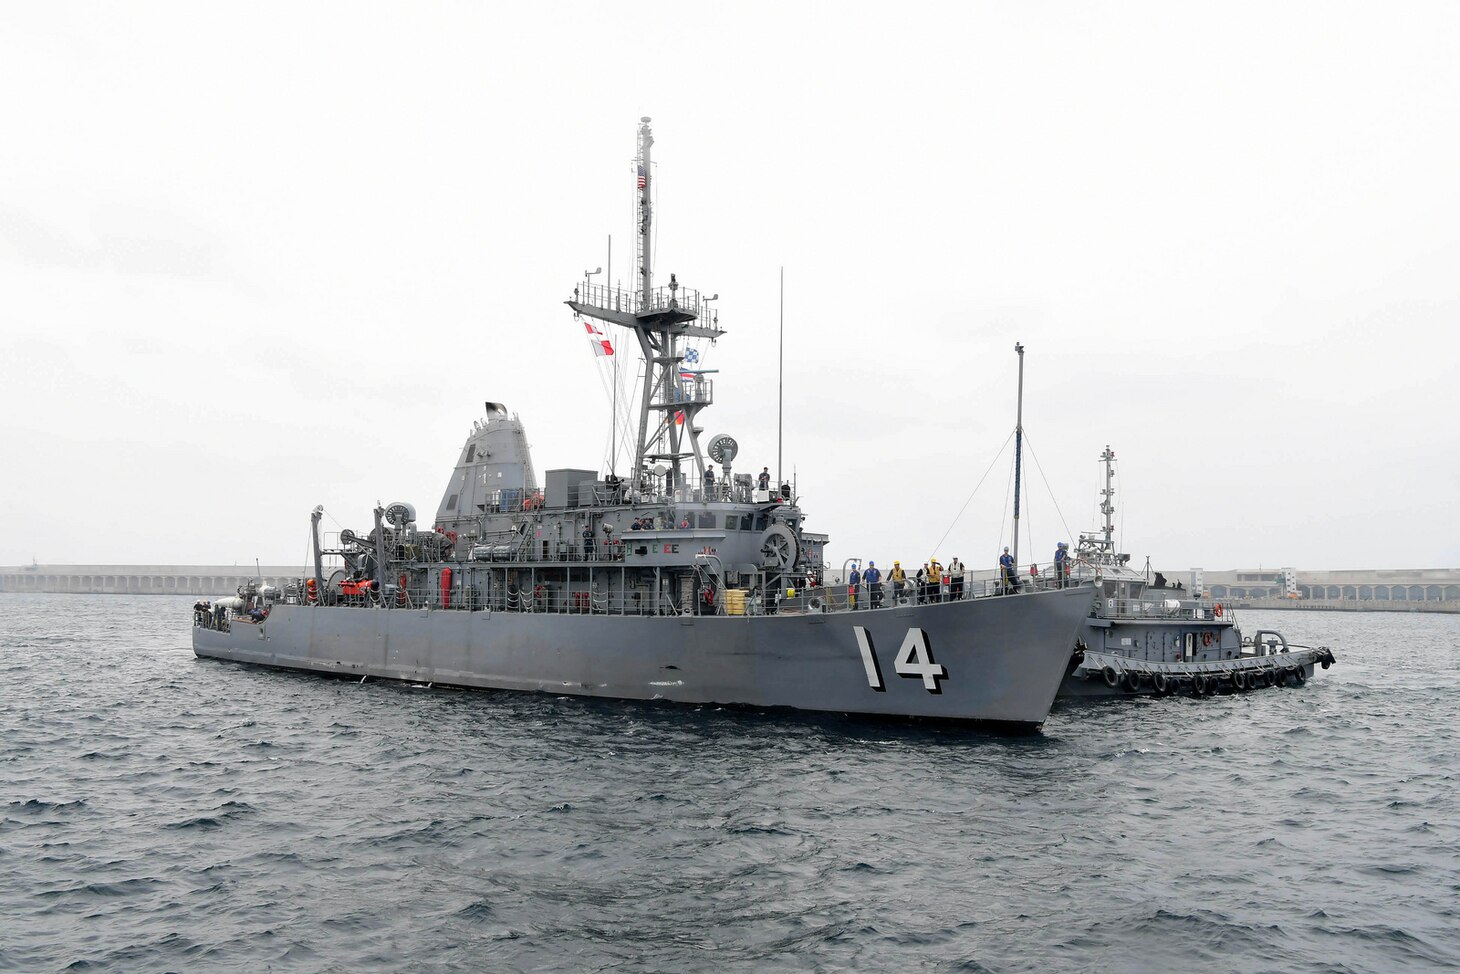 USS Chief Arrives in Busan Ahead of MN MIWEX